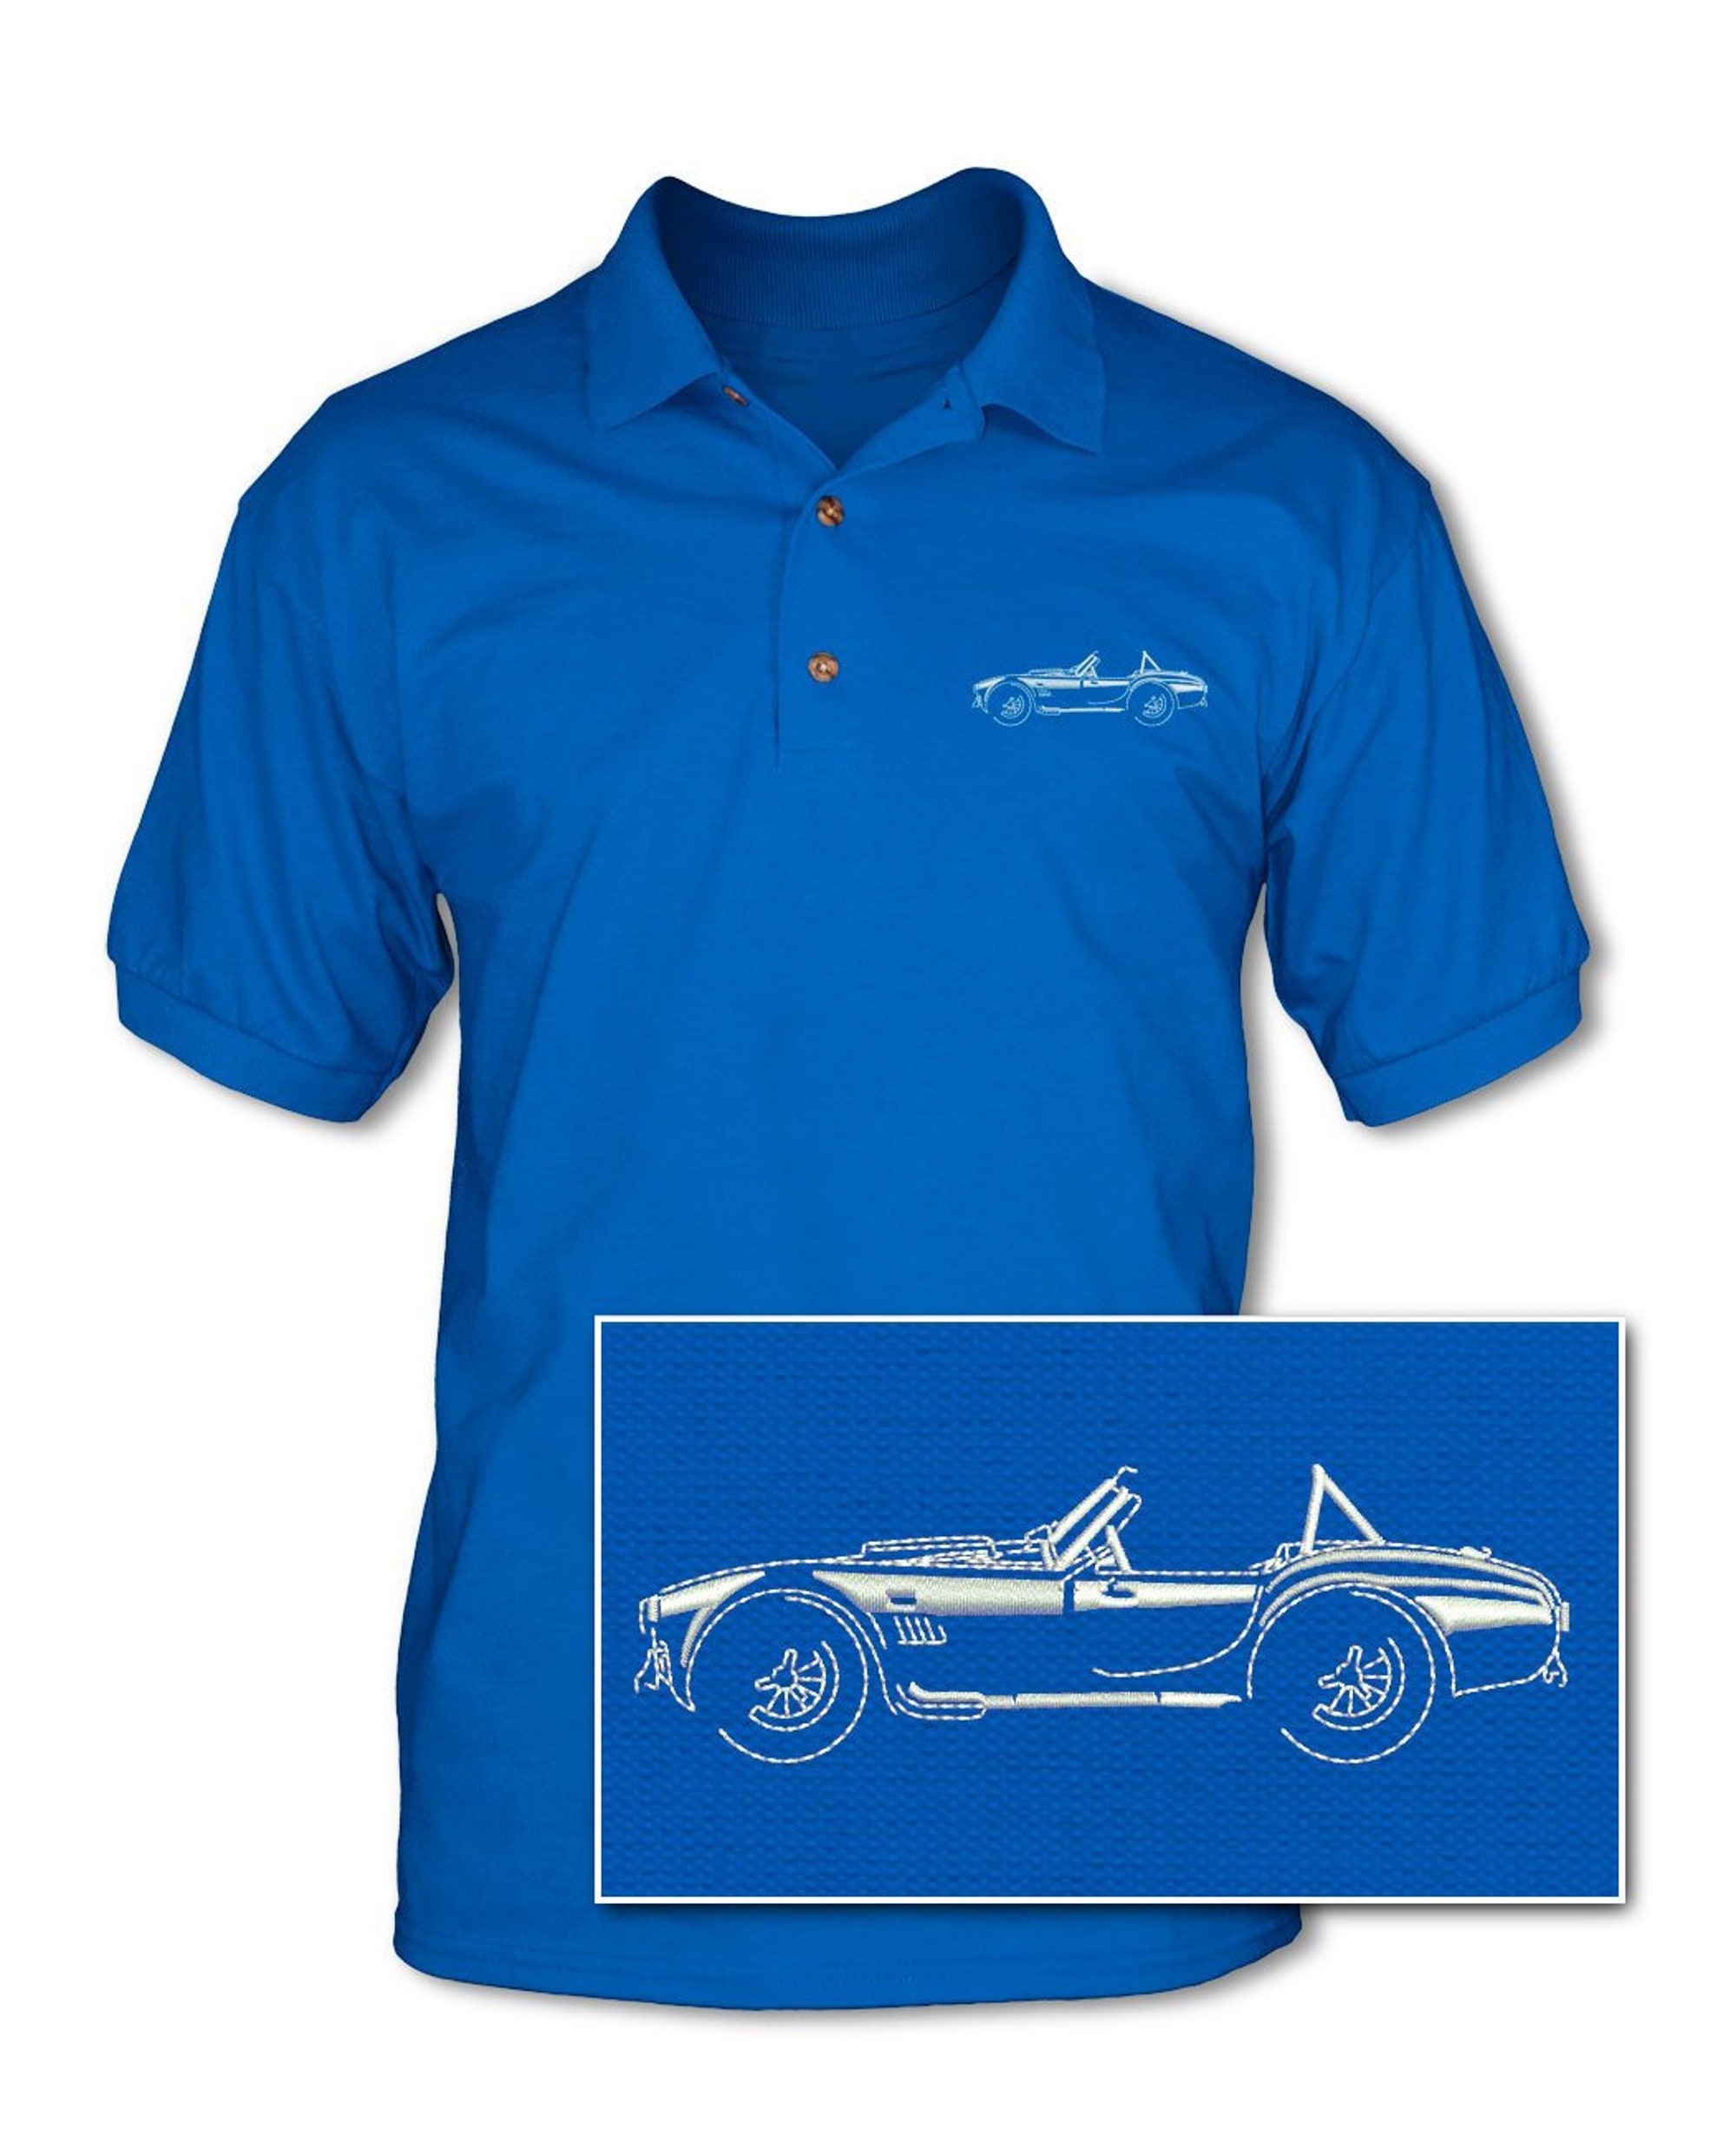 Discover 1965 AC Shelby Cobra 427 SC Side View Adult Pique Polo Shirt - American Classic Car